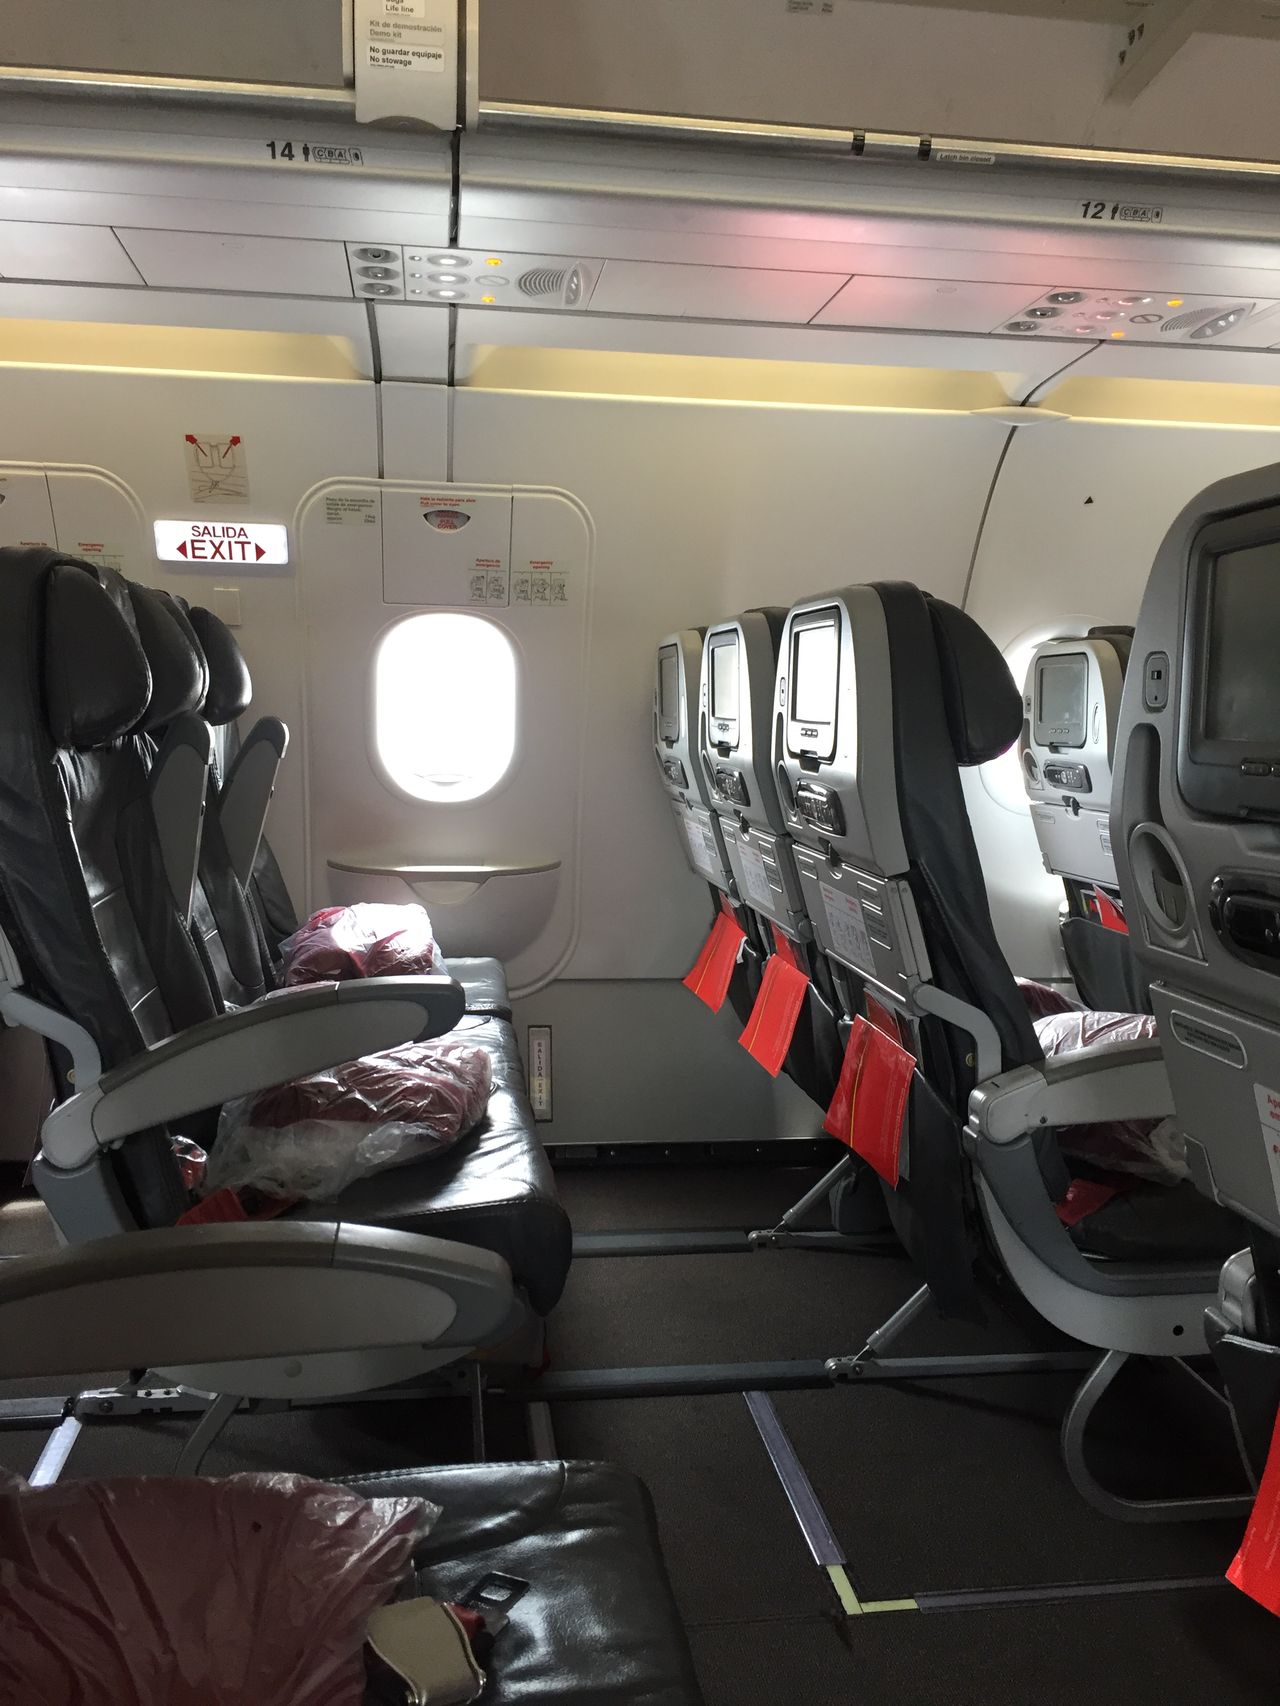 Review of Avianca flight from Bogota to San Salvador in Economy